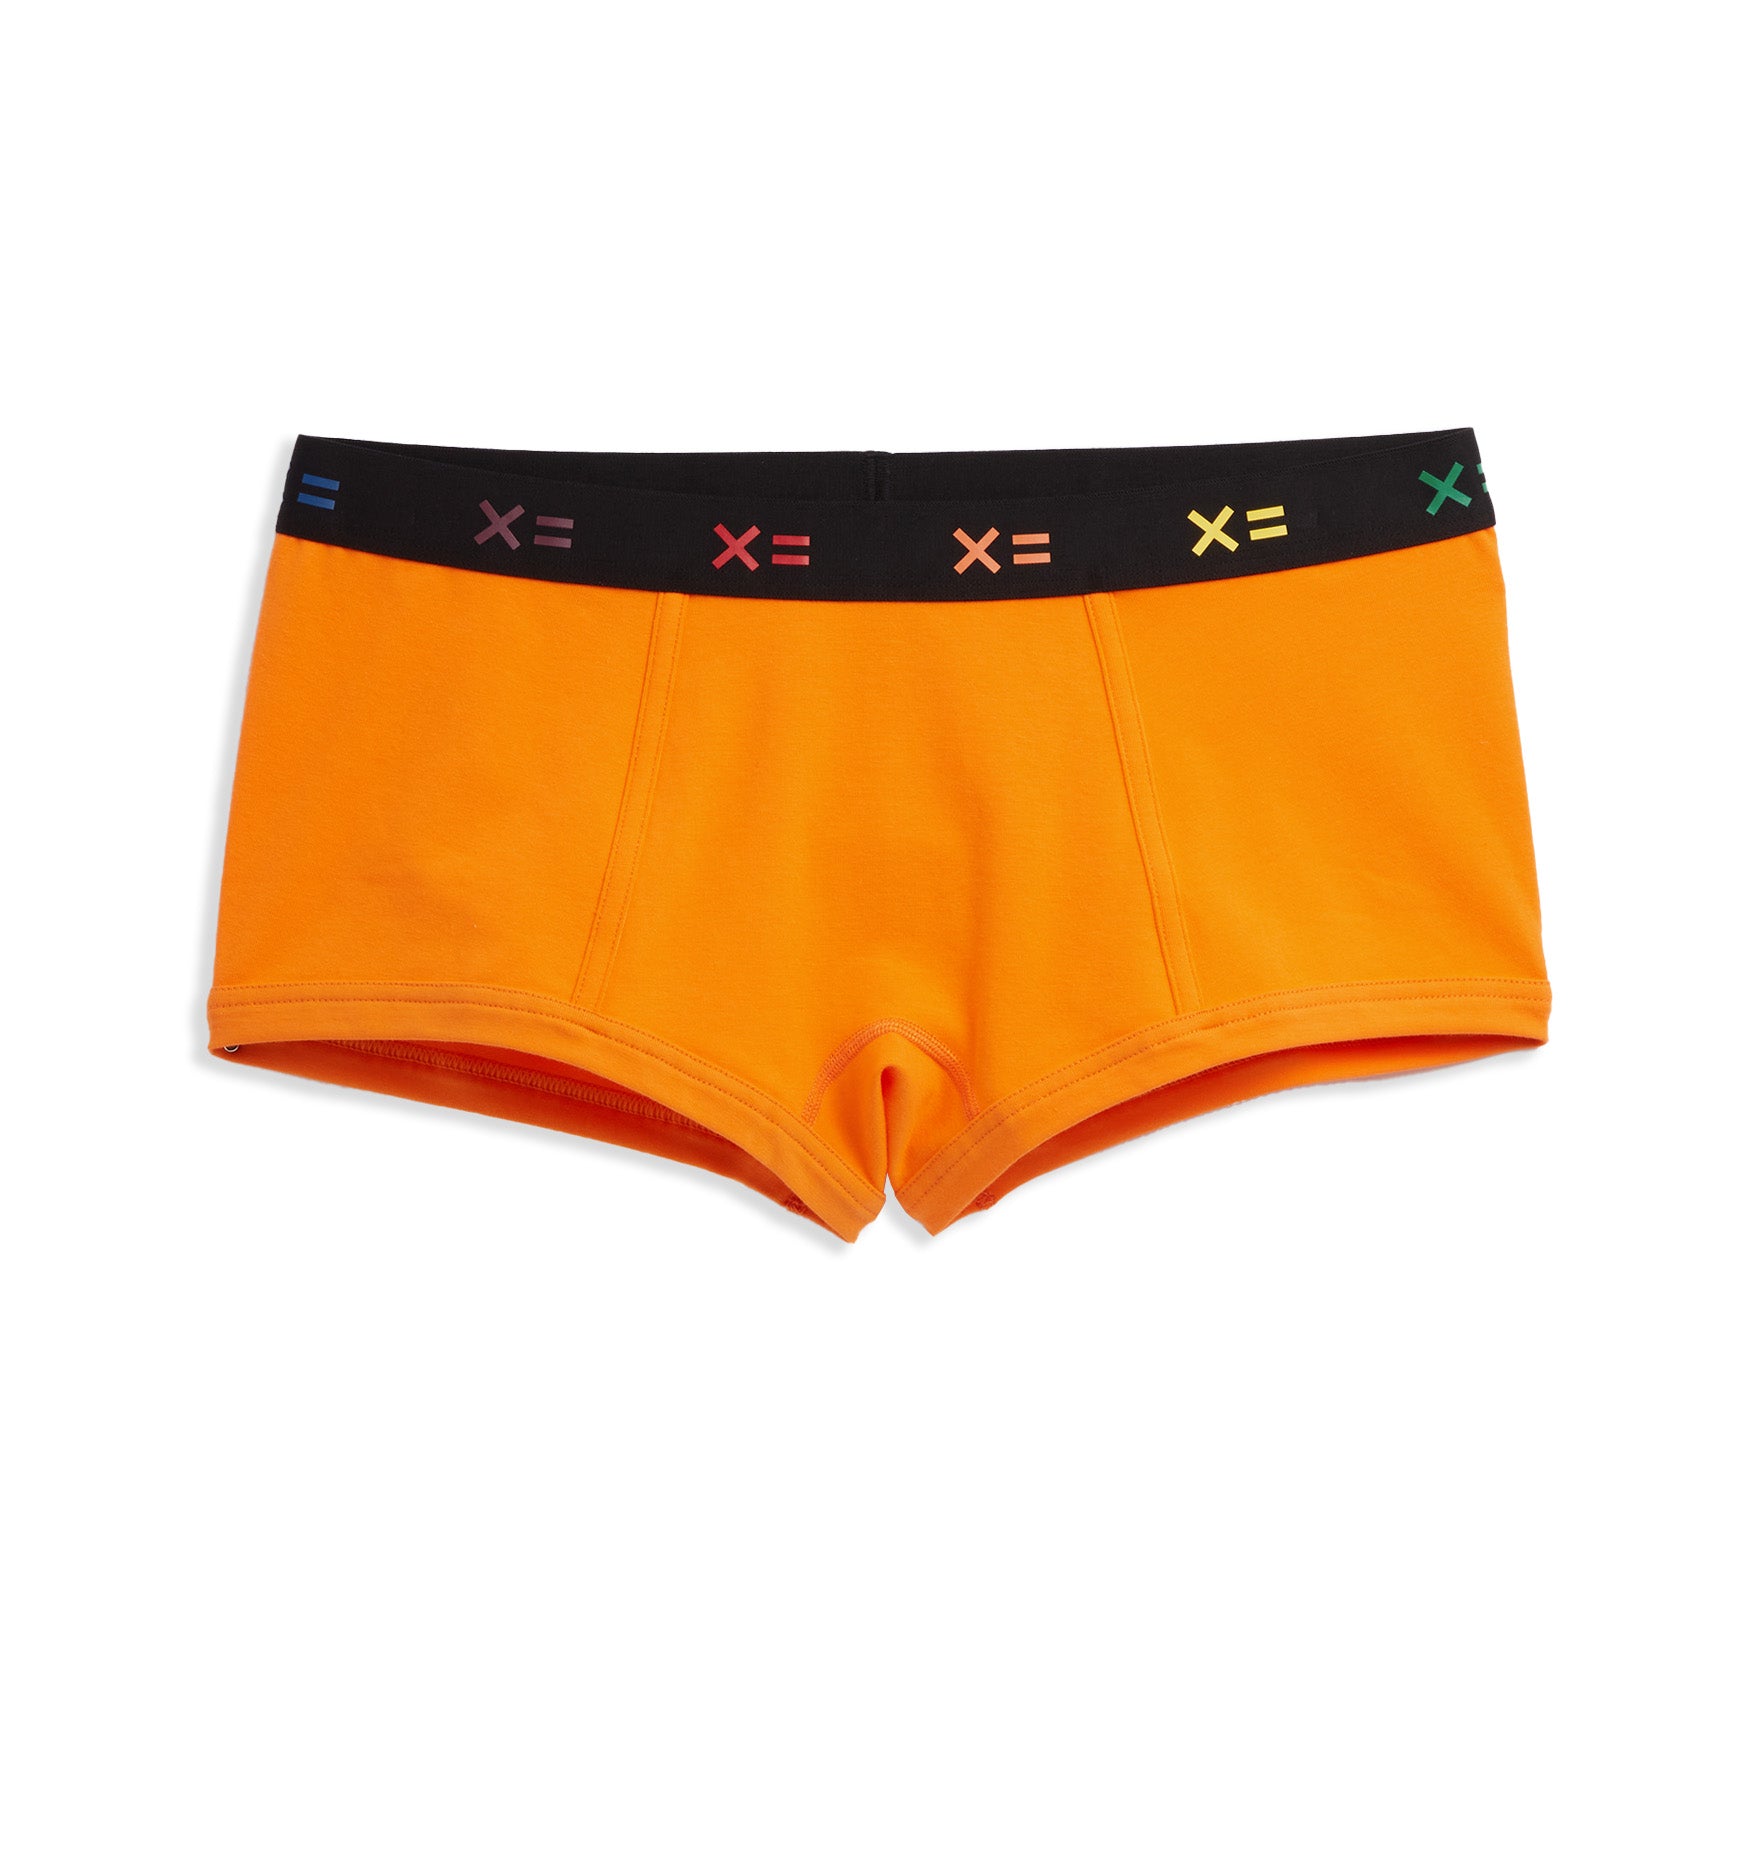 Boy Shorts - X= Orange Crush